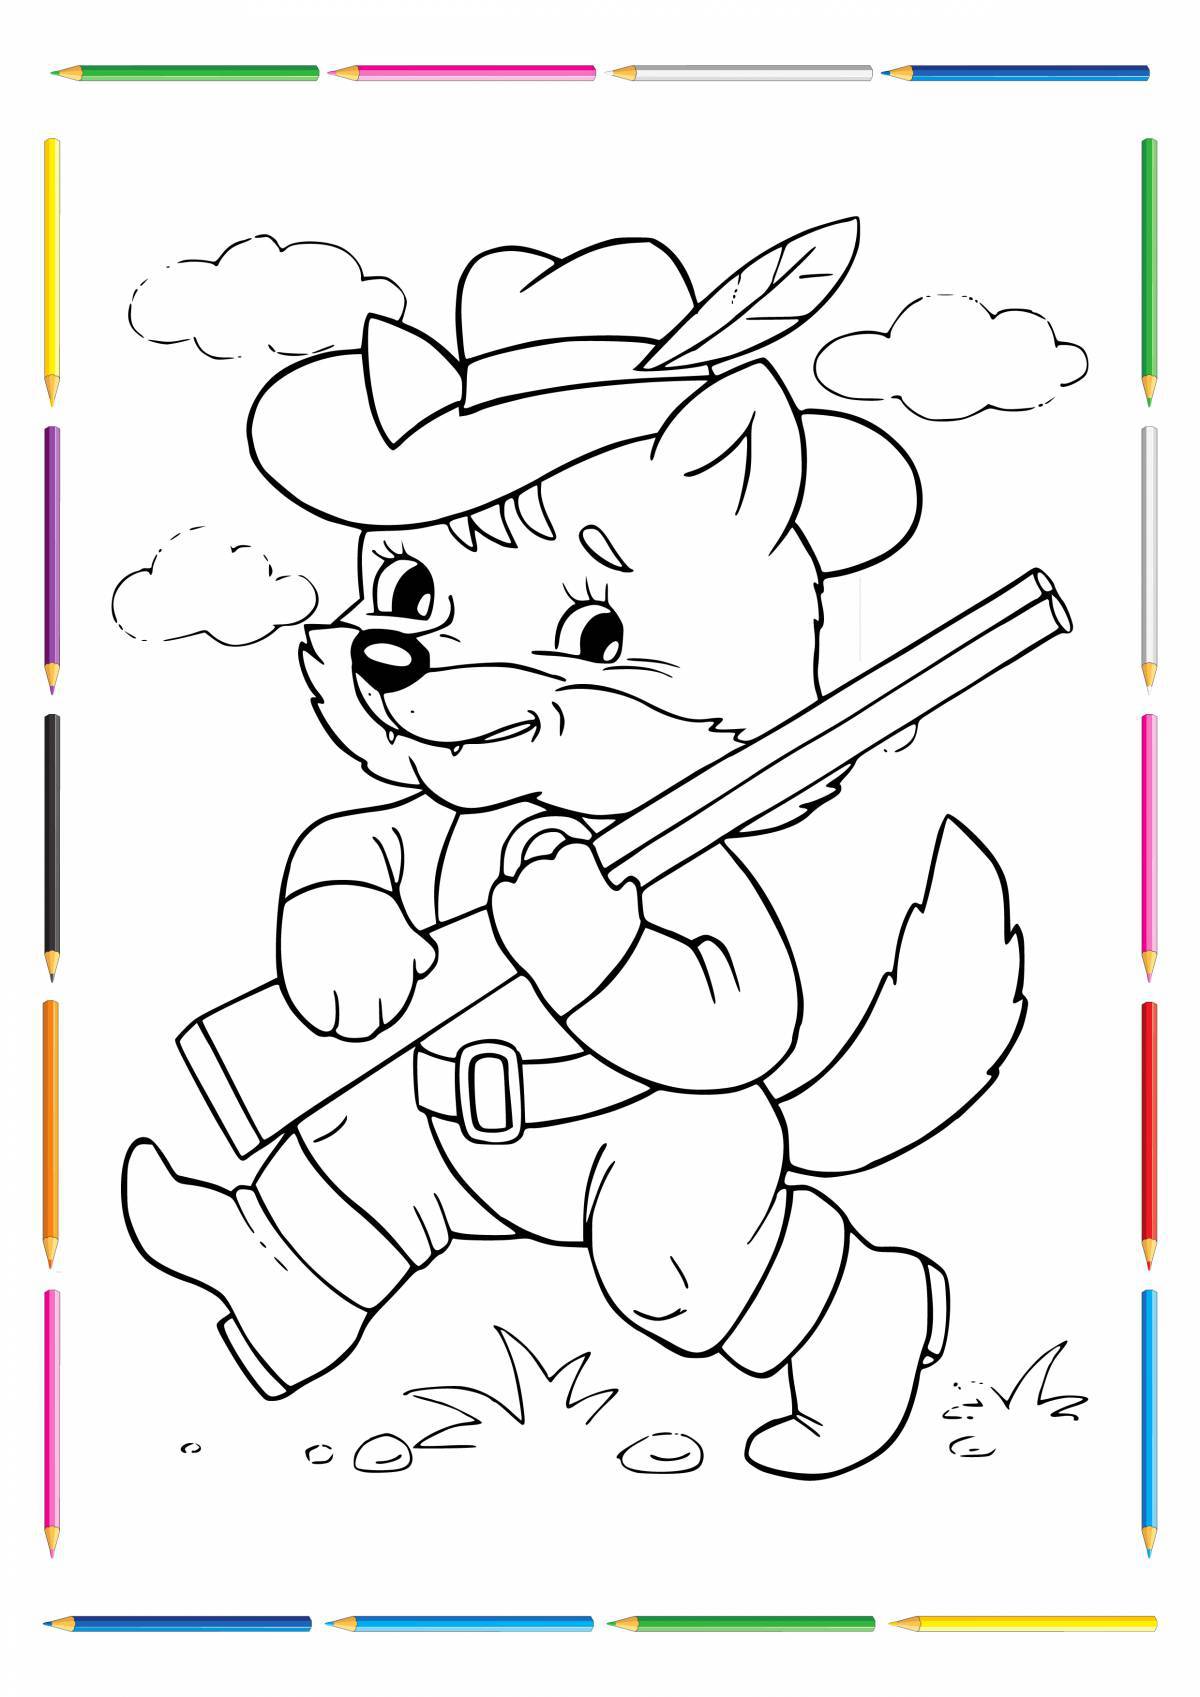 Color-frenzy coloring page для детей 6-7 лет